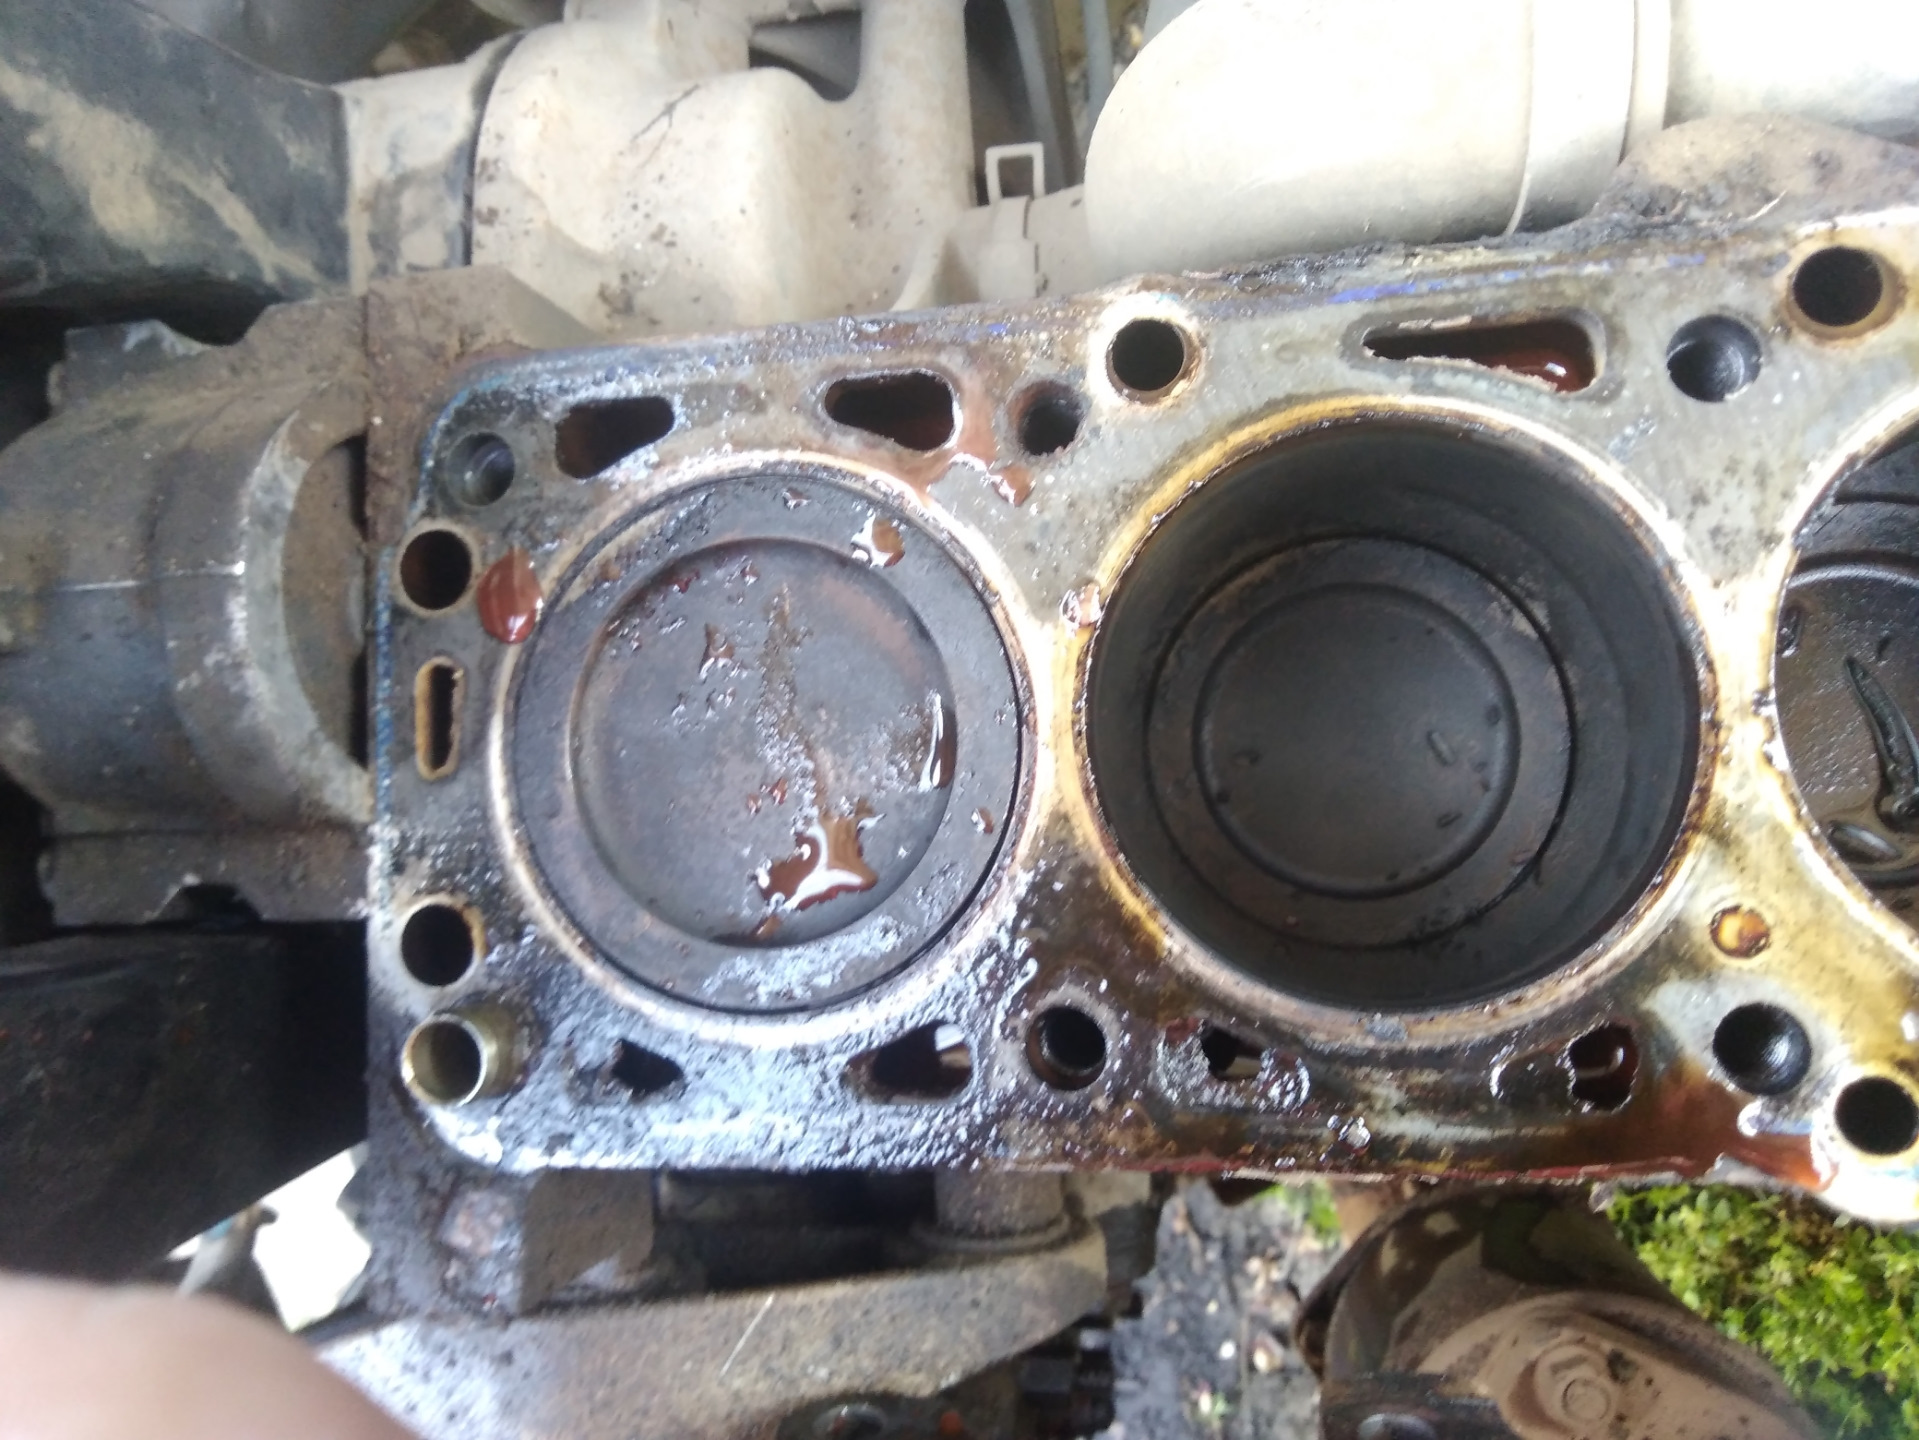 Ваз 2114 гнет. Загнуло клапана ВАЗ 2110 120 мотор. Клапан пробил поршень ВАЗ 2115. ВАЗ 2107 погнуло клапана. Погнуло клапана на n13b16.